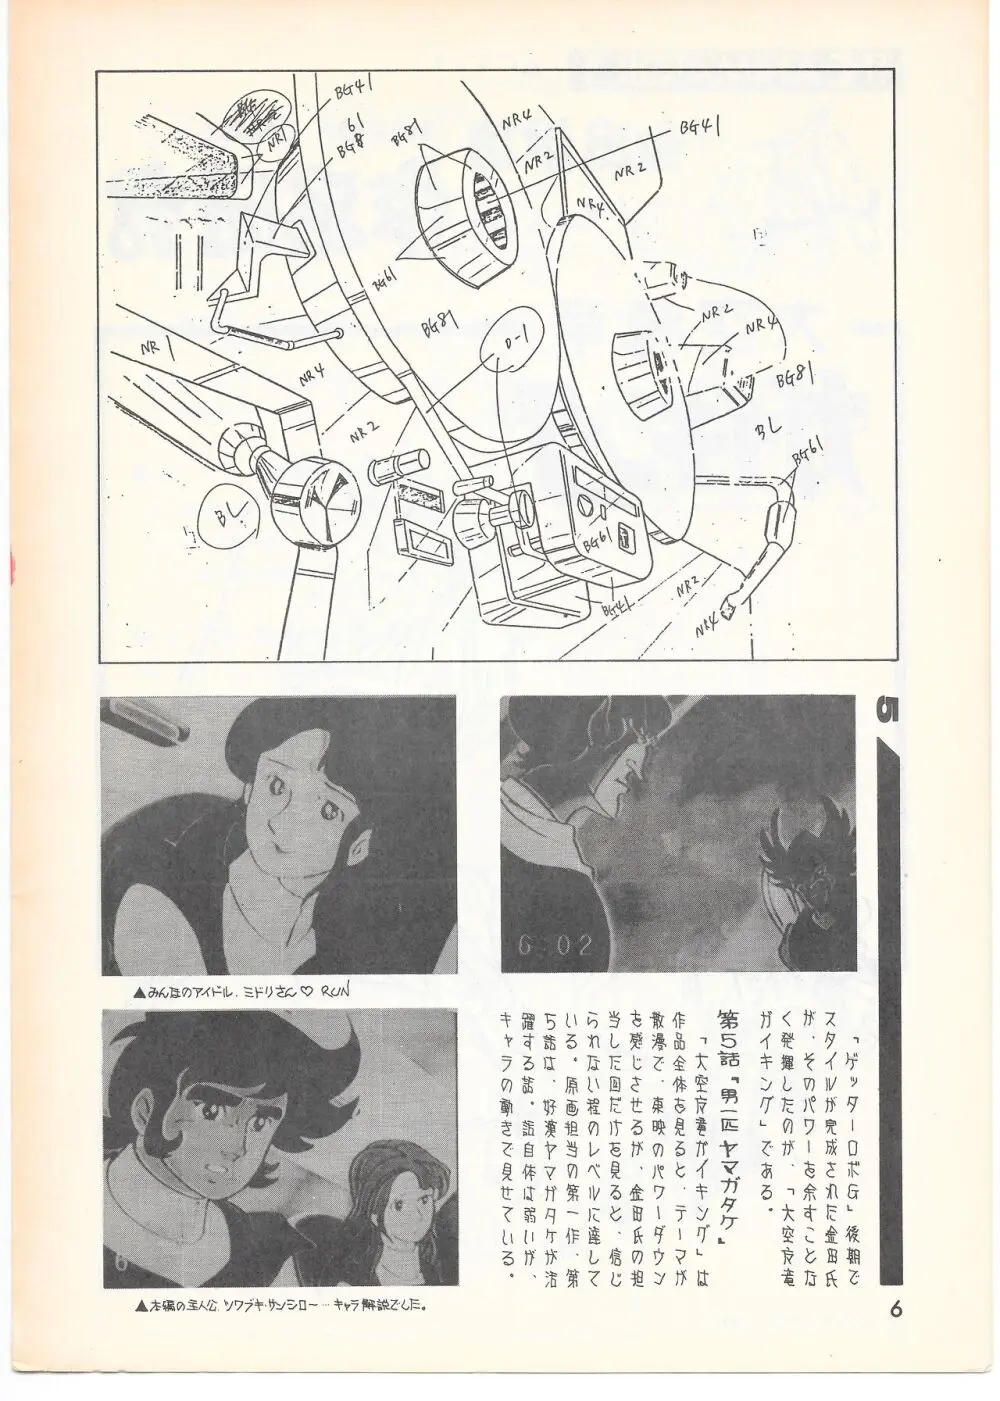 THE ANIMATOR 1 金田伊功特集号 - page5